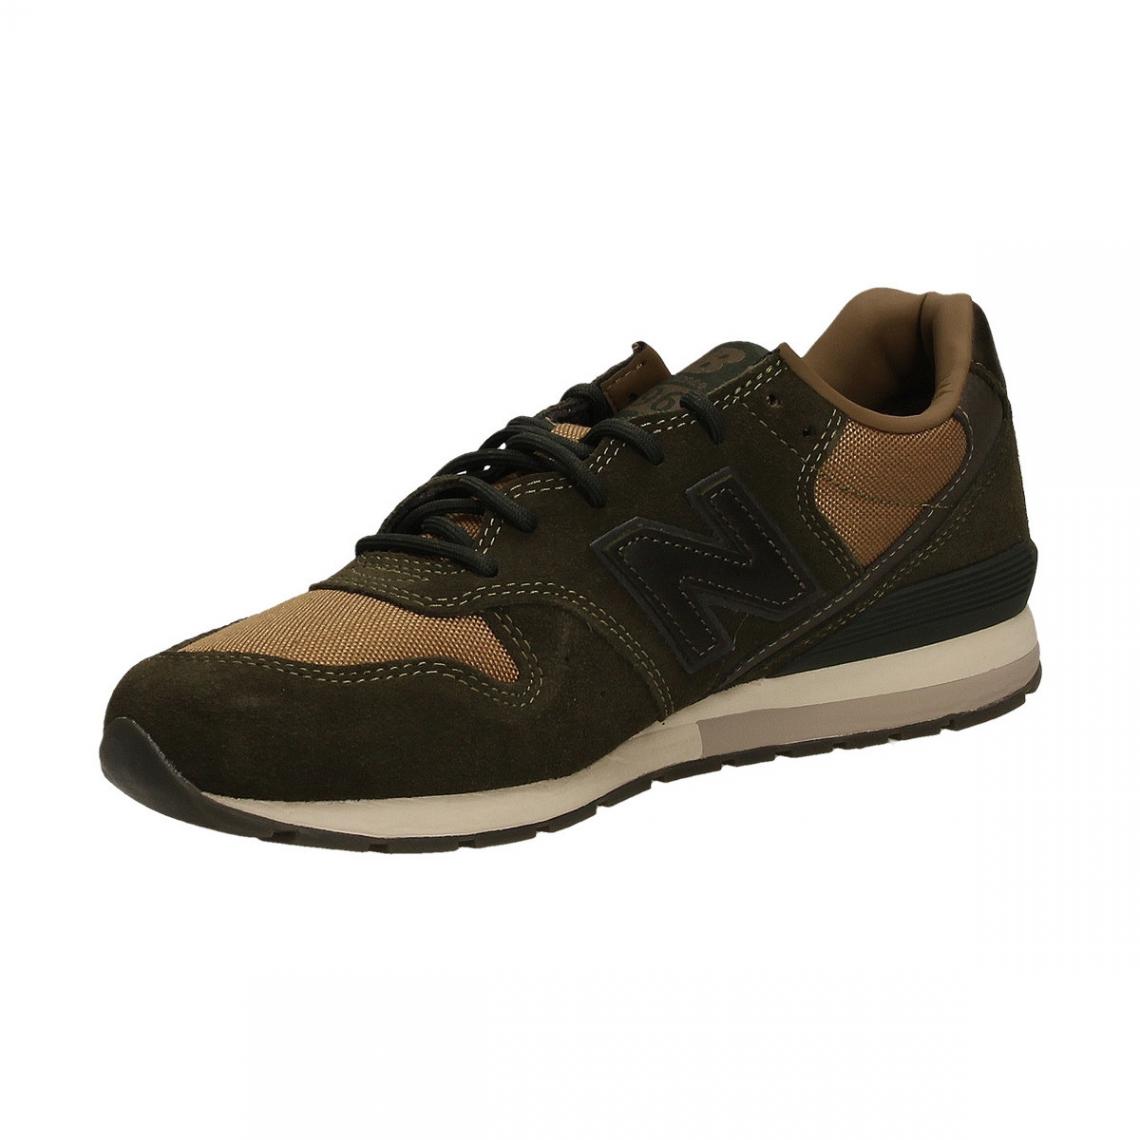 New Balance 996 Mildt/Mimetico | Sneakers Uomo - Lapasquadibach هيلاهوب